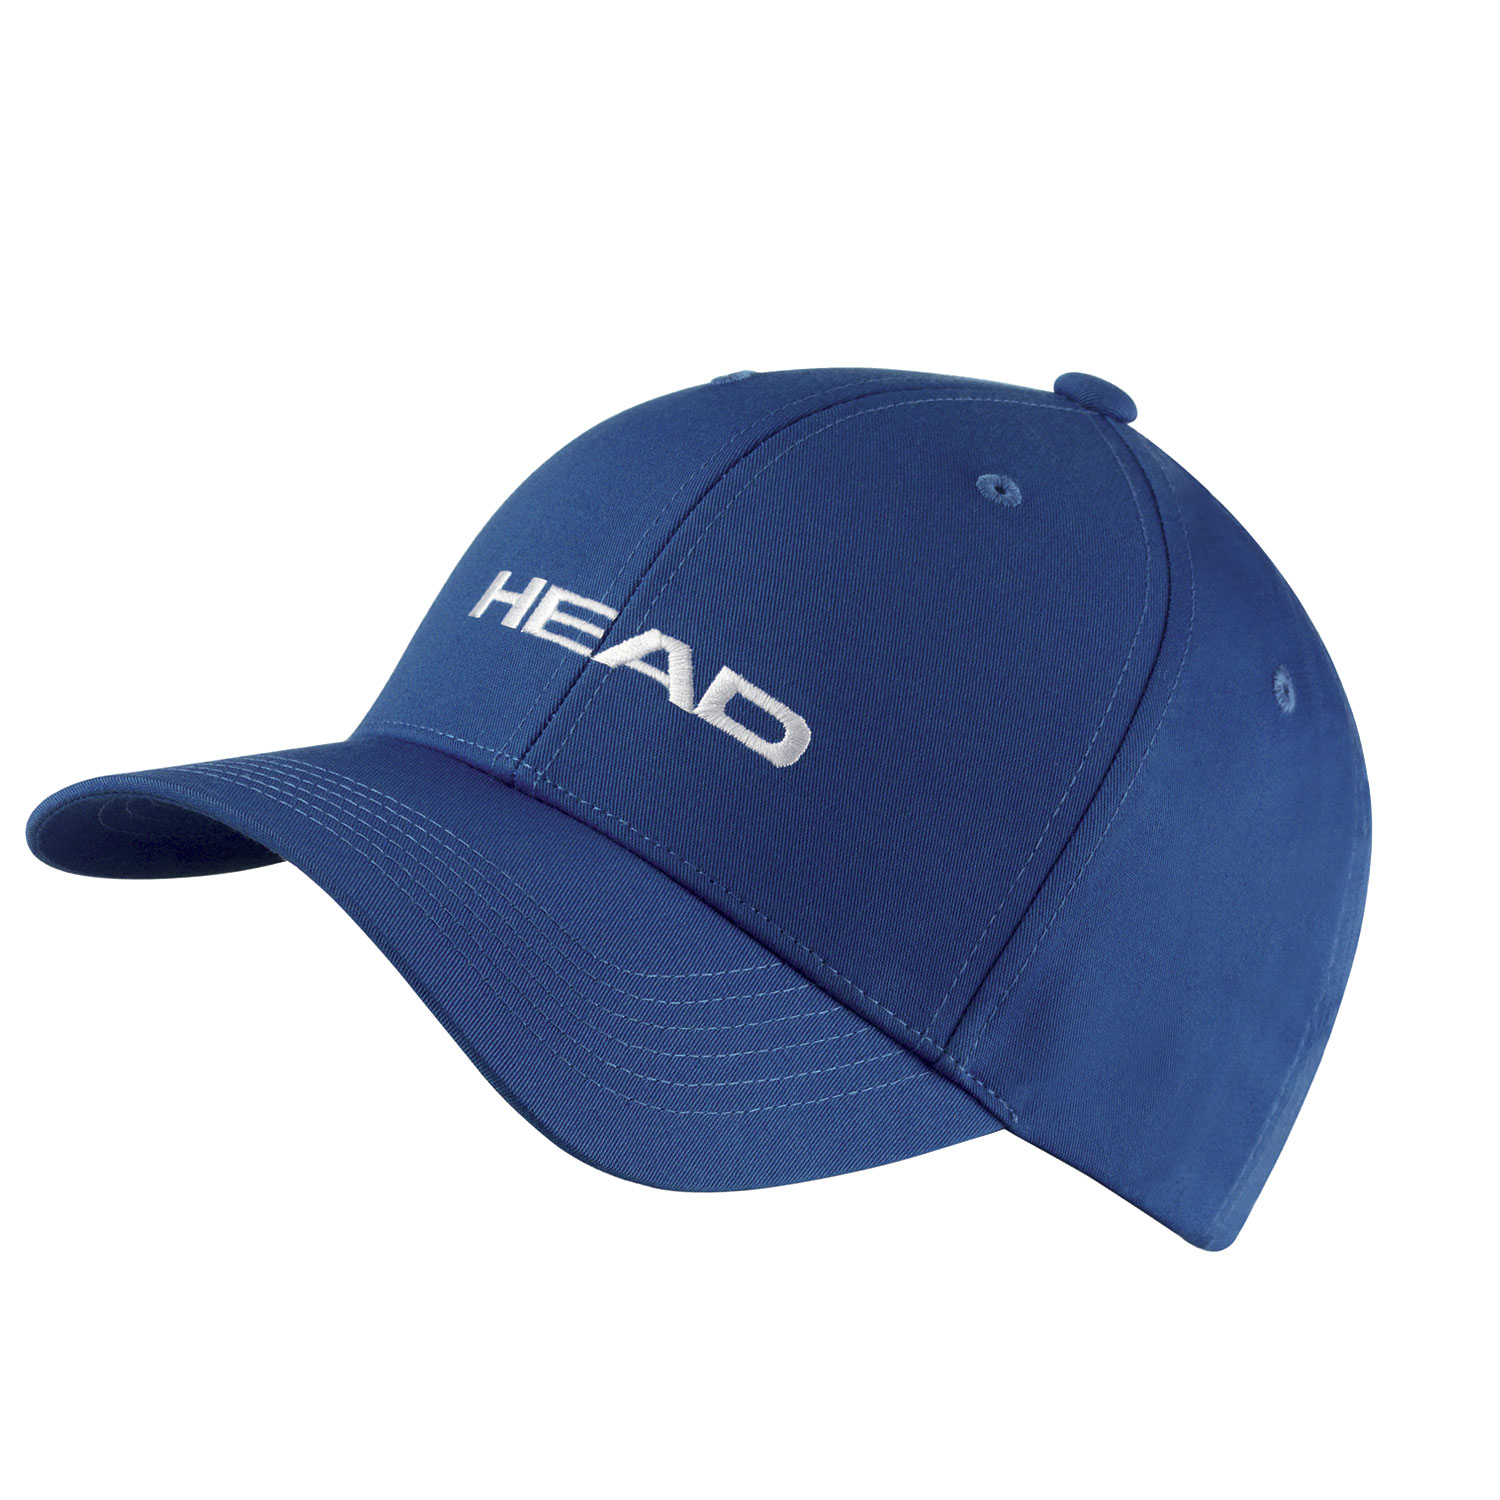 Head Promotion Cappello - Blue